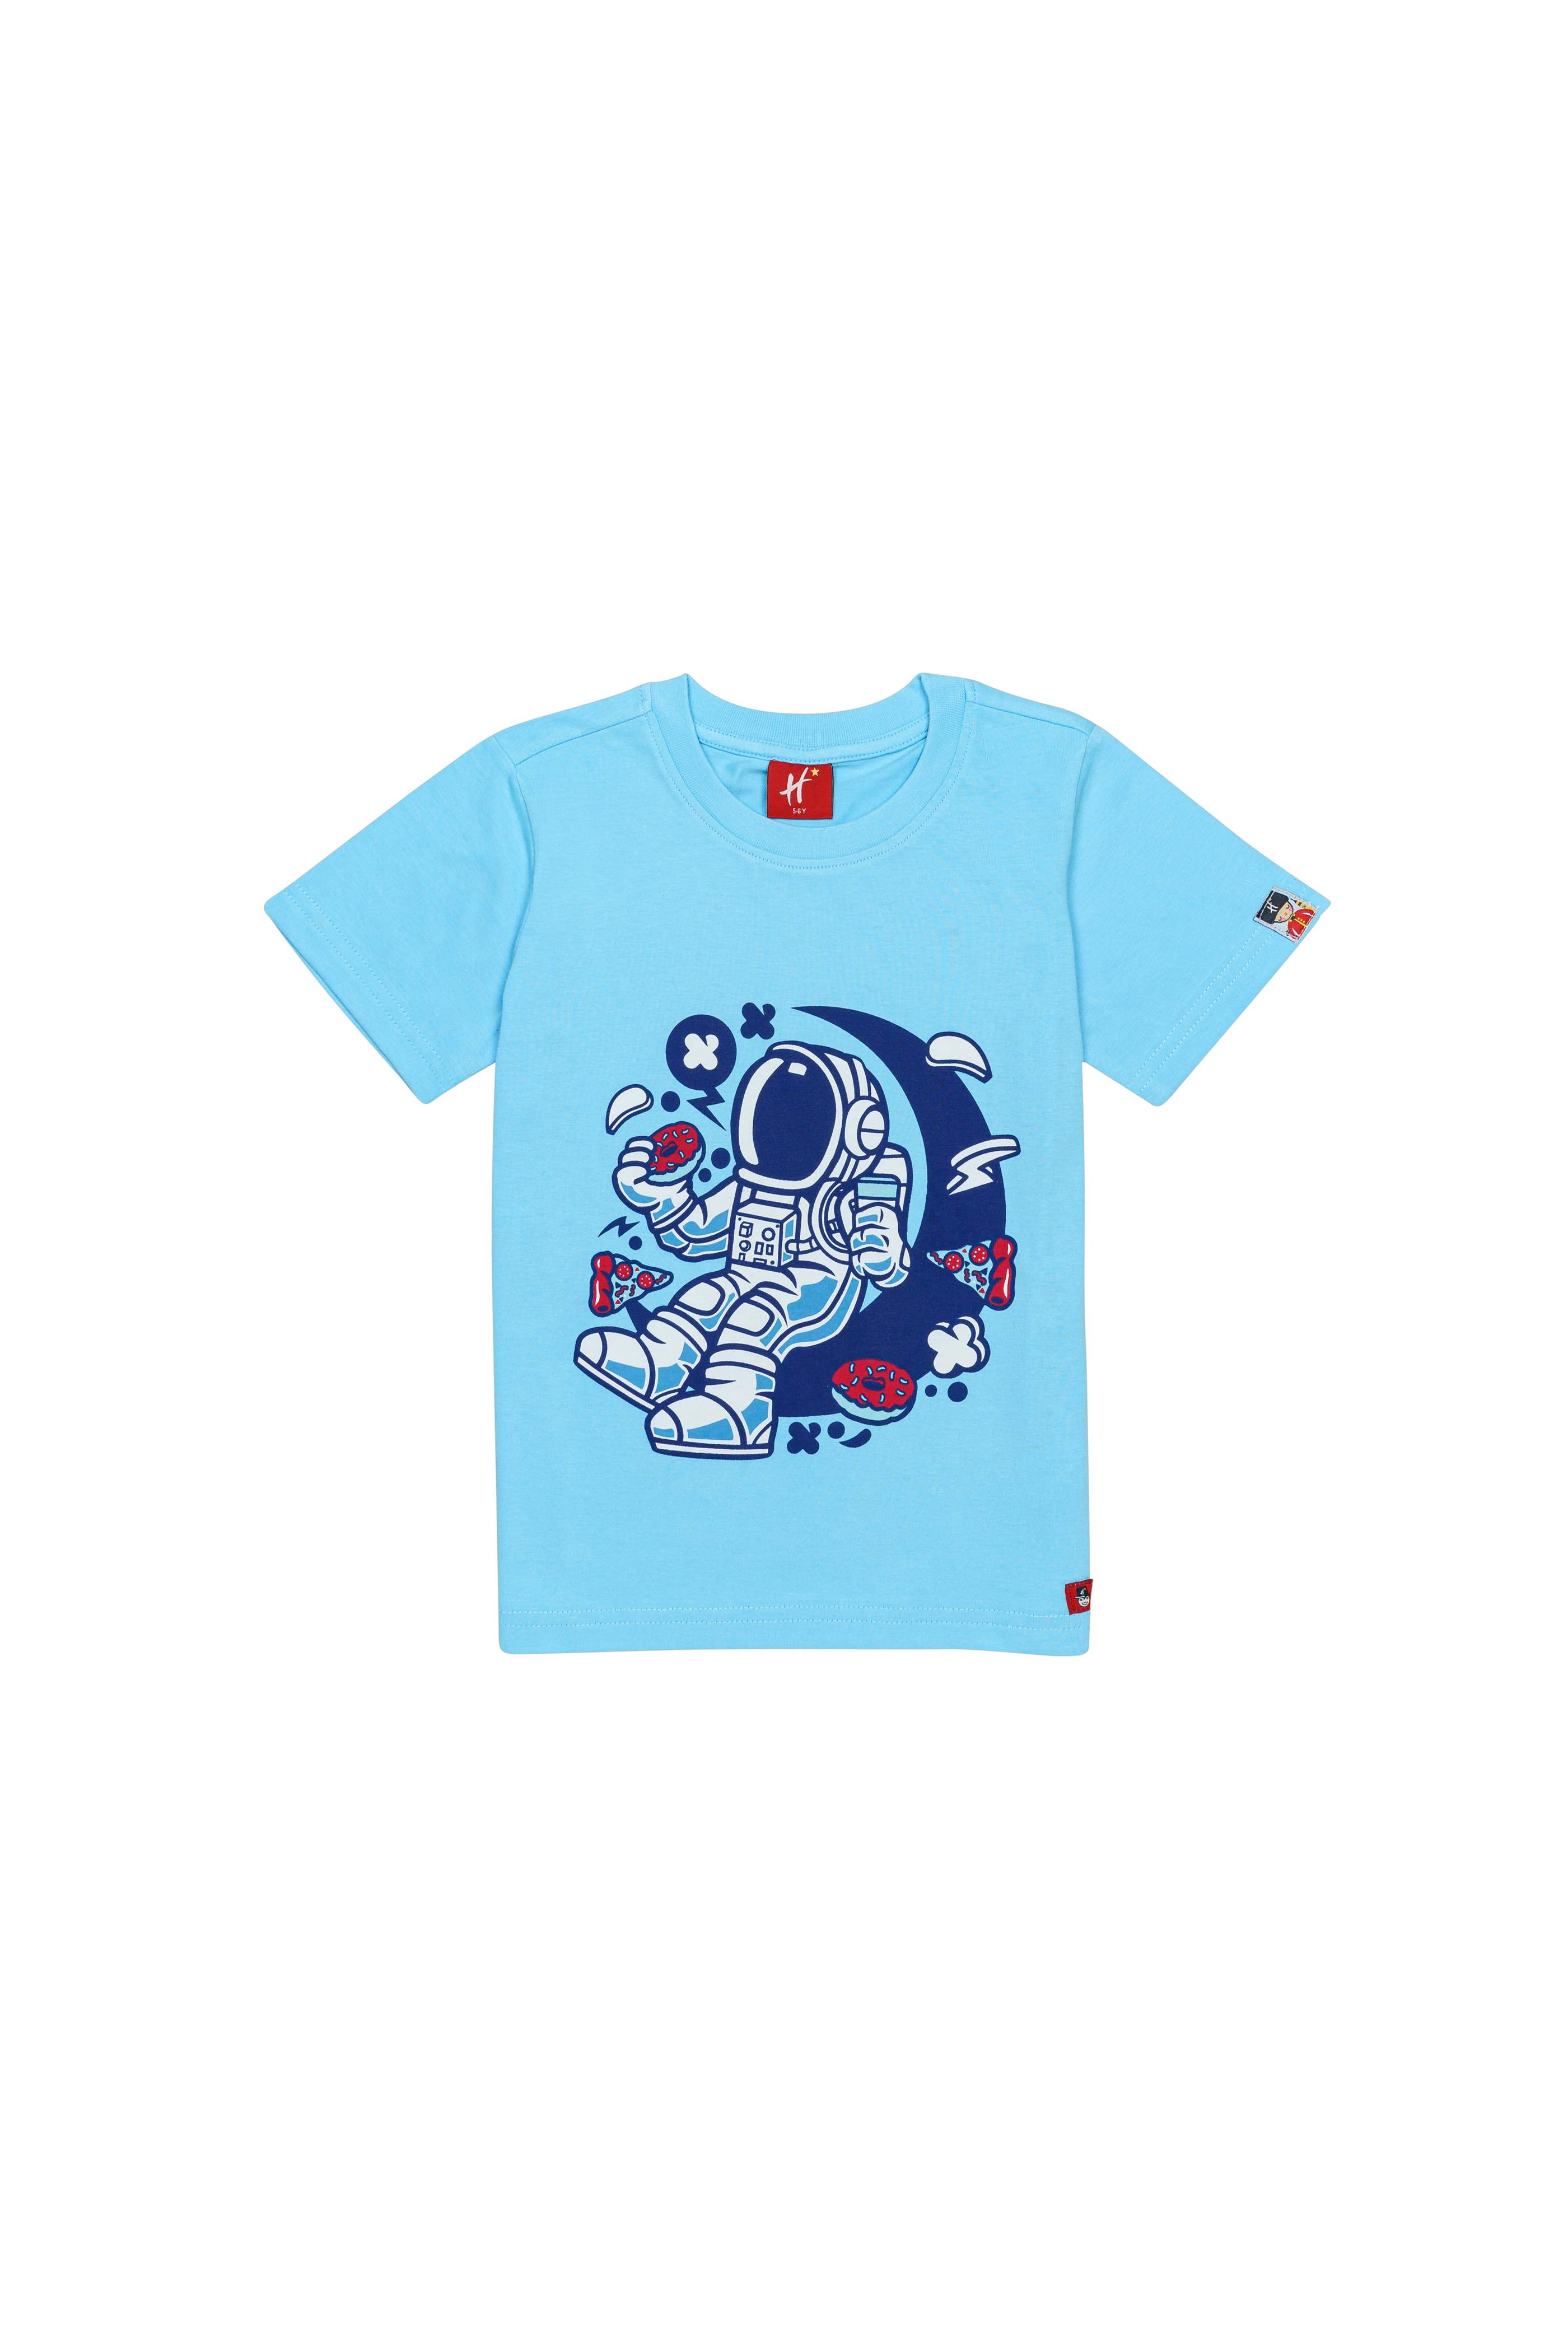 H by Hamleys Boys Graphic Print Blue T-Shirt